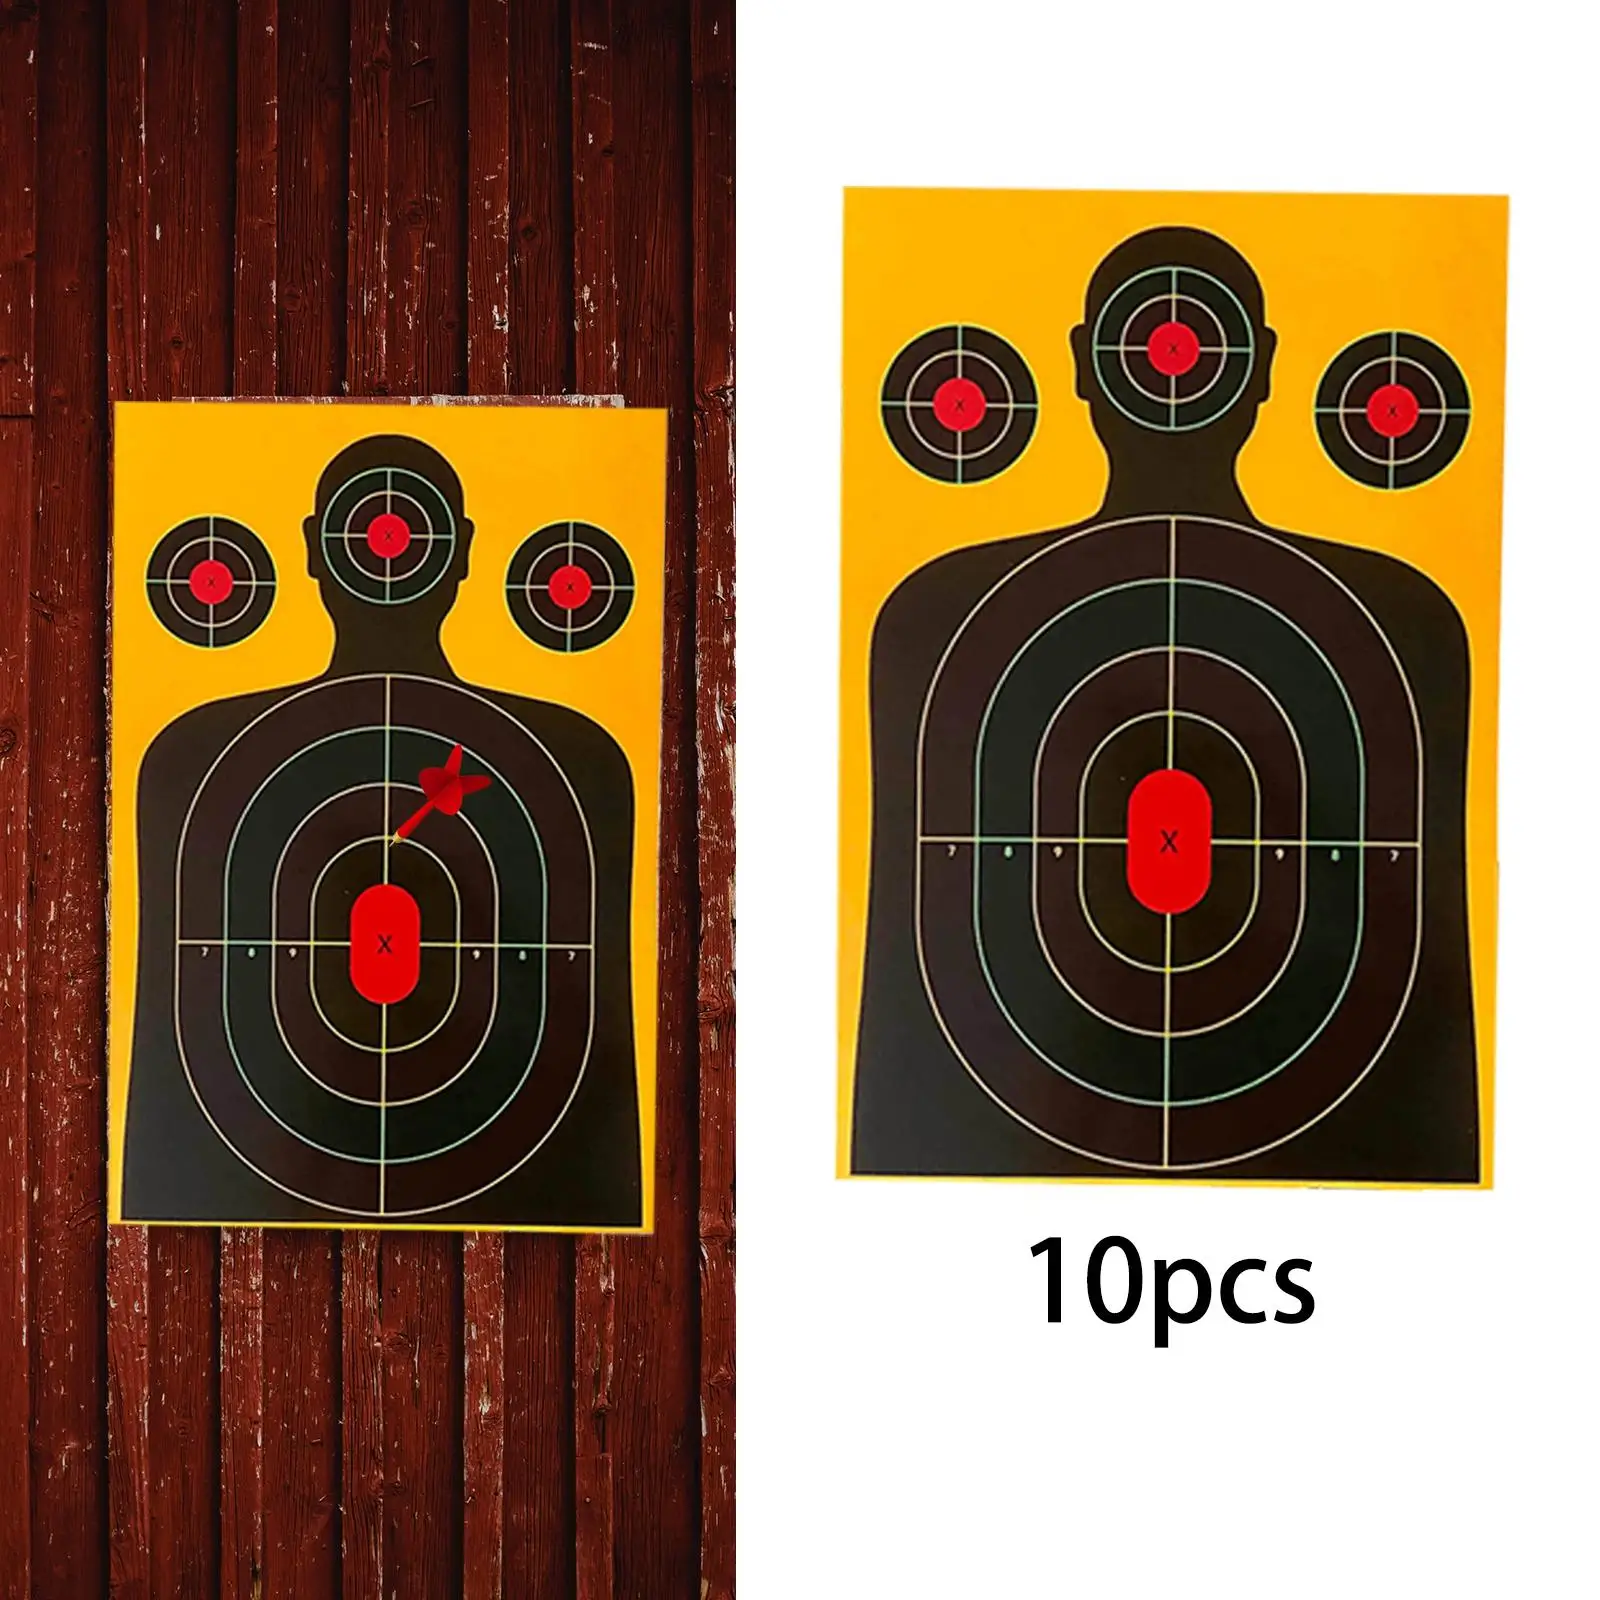 10Pcs Silhouette Target Hunting Practice Outdoor Activities Training Target